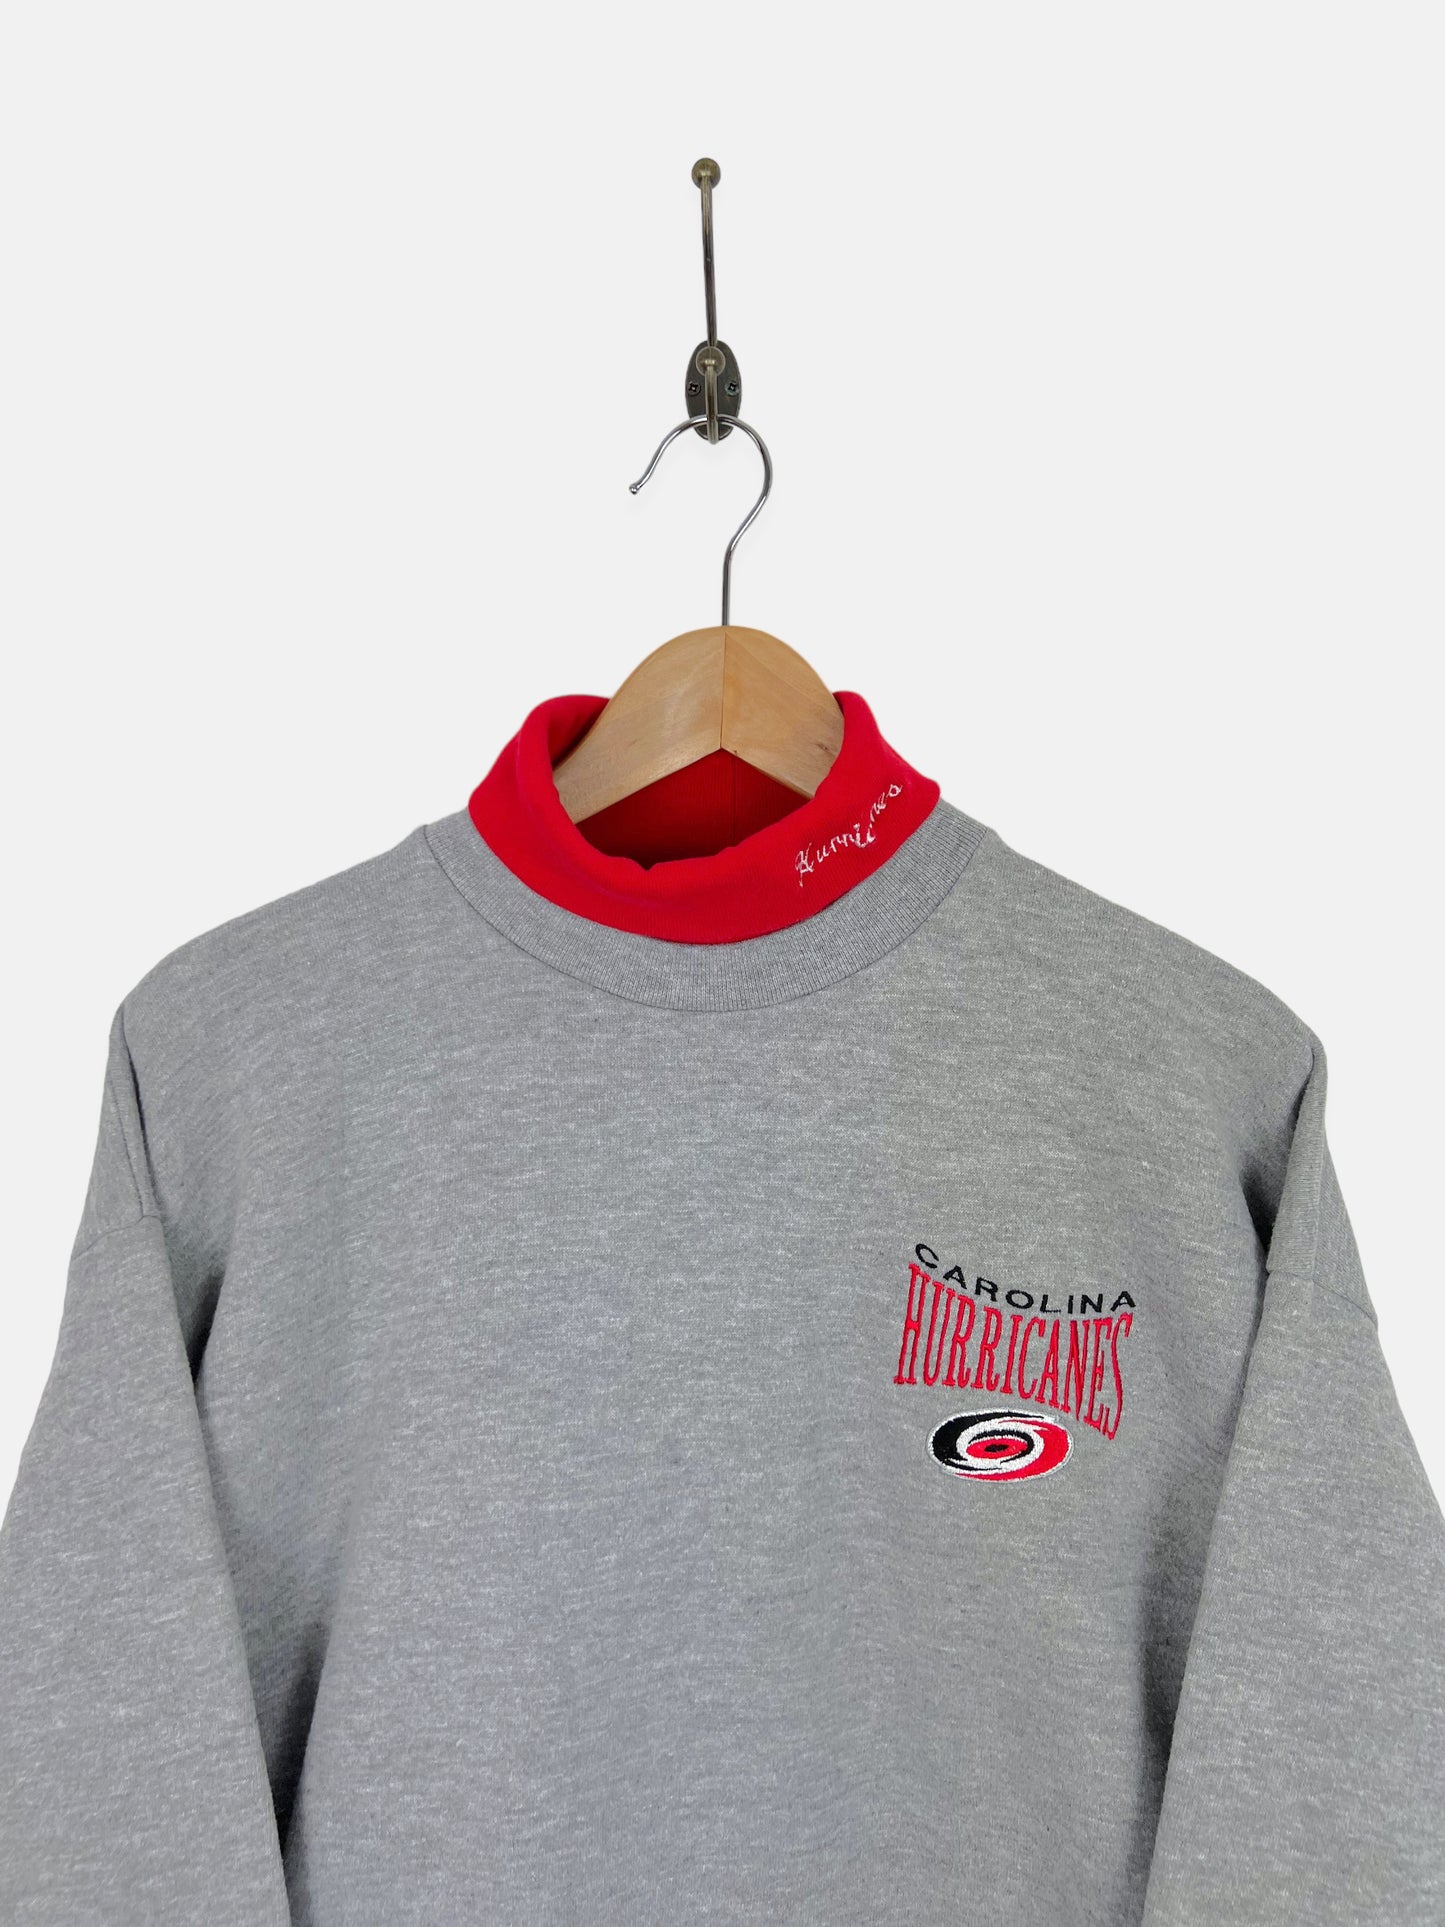 90's Carolina Hurricanes NHL USA Made Embroidered Vintage Mock-Neck Sweatshirt Size L